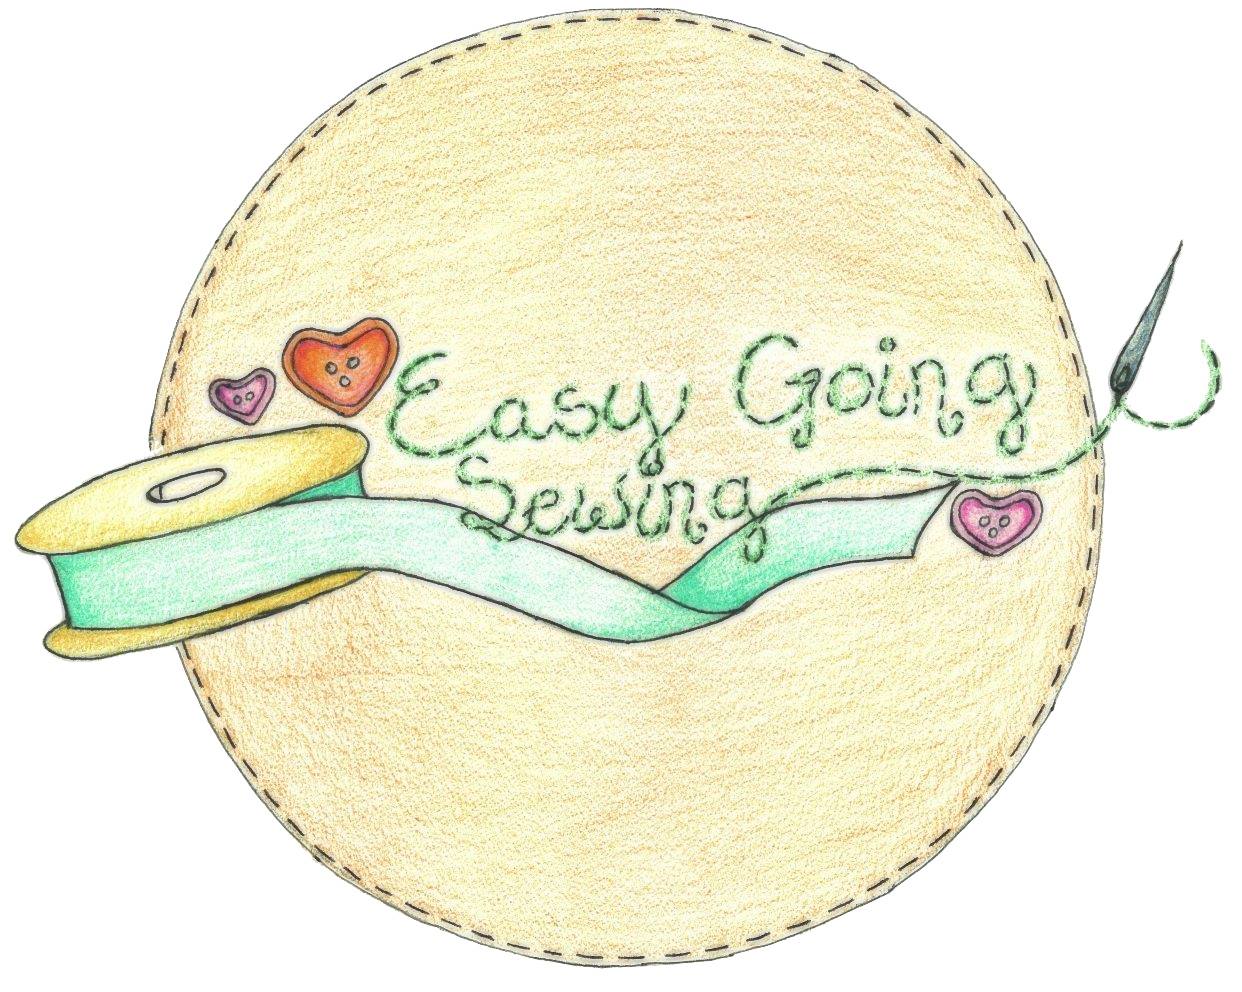 Easy Going Sewing 2015 Atlanta Summer Camp